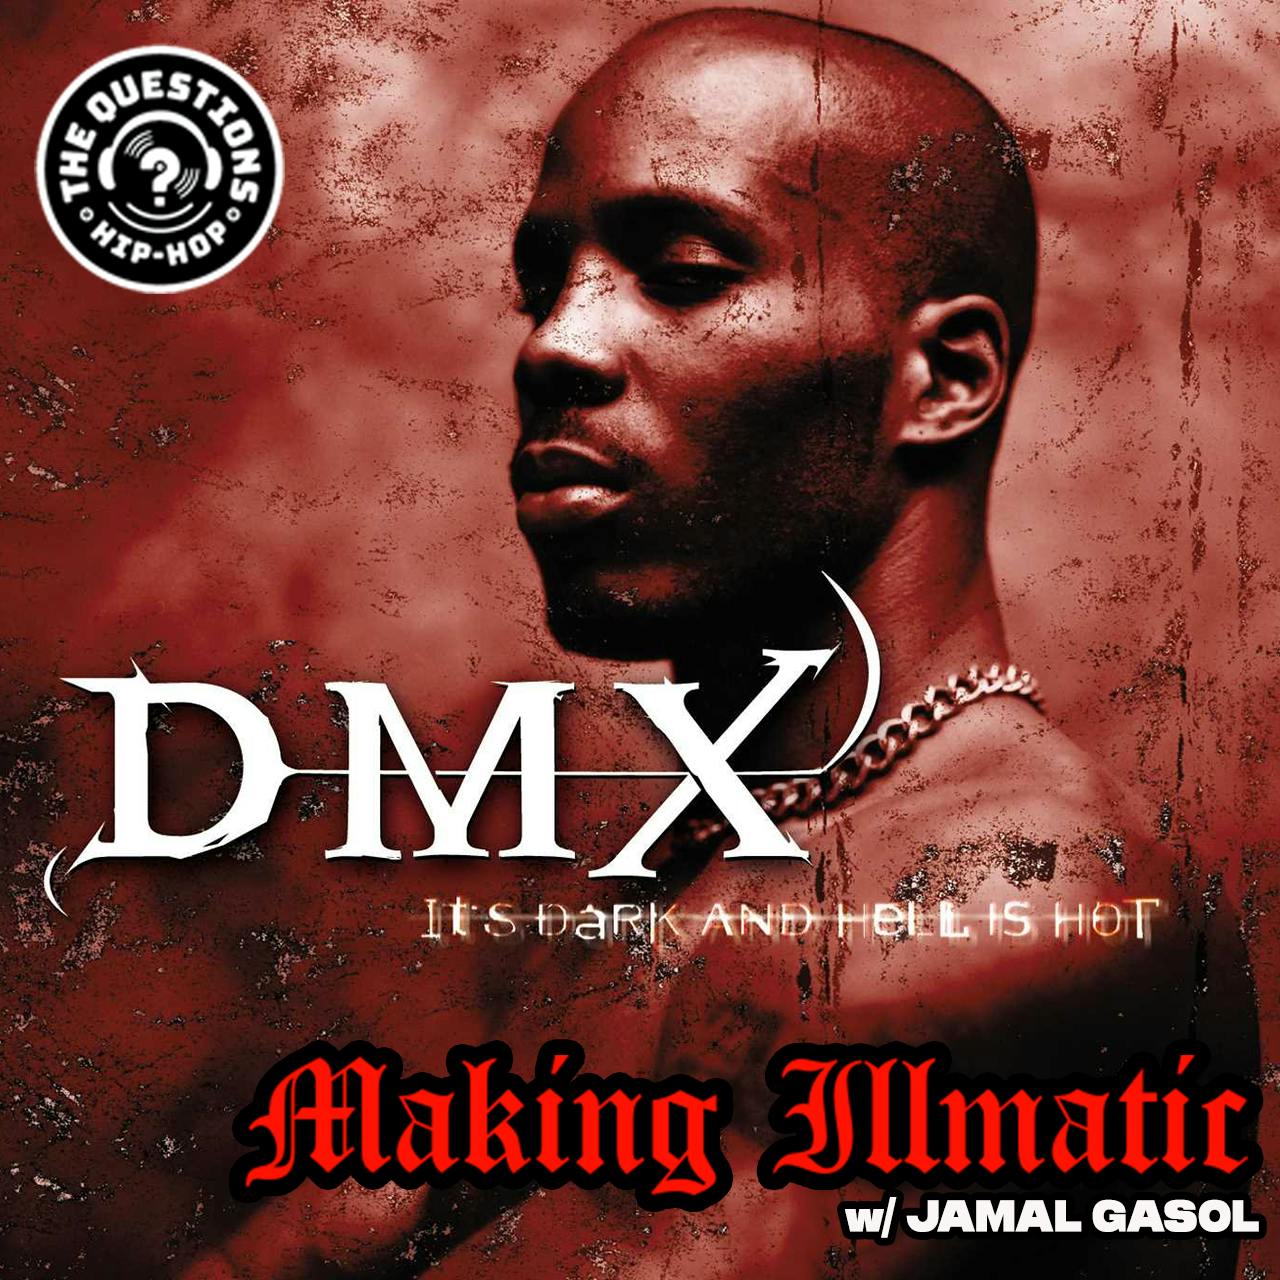 Making Illmatic: DMX 'It's Dark and Hell is Hot' w/ Jamal Gasol